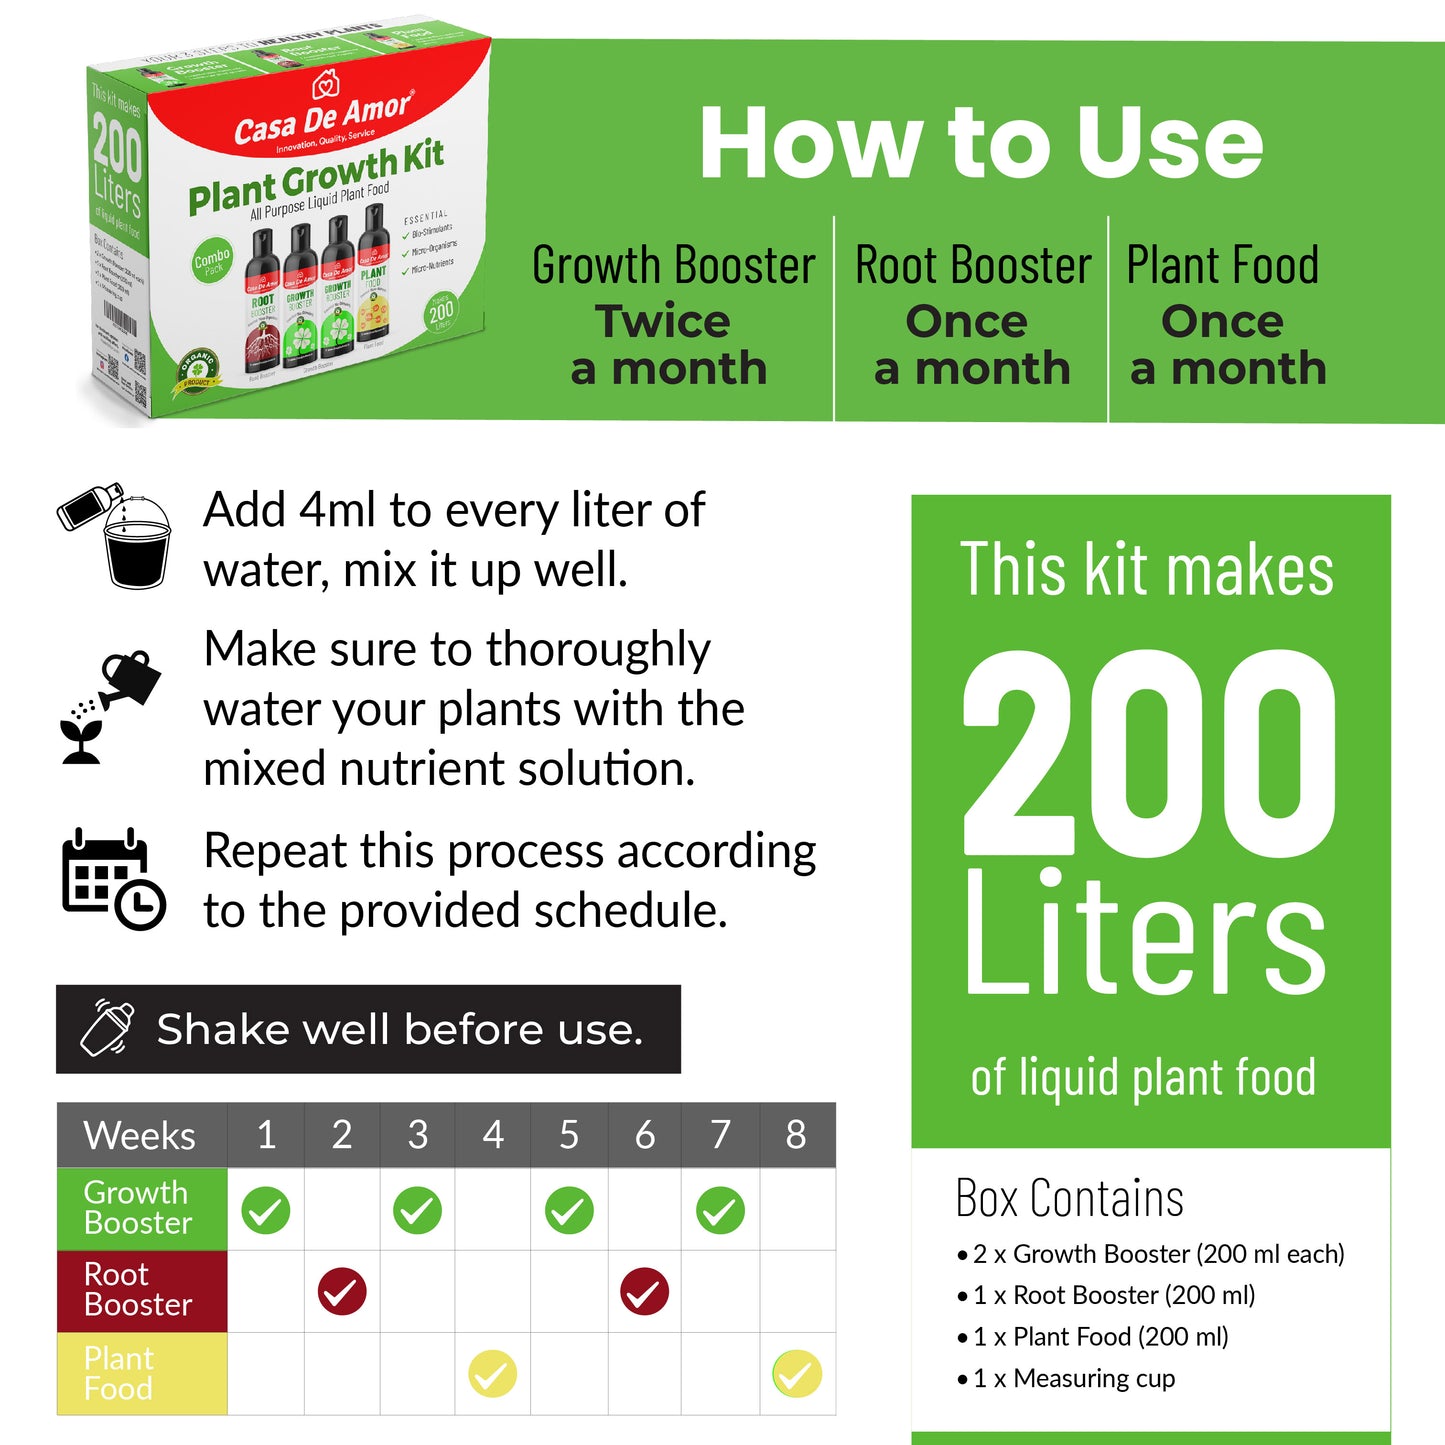 Casa De Amor Plant Growth Kit 3-in-1 Liquid Fertilizers | Ideal for Indoor and Outdoor Gardens (800 ml)